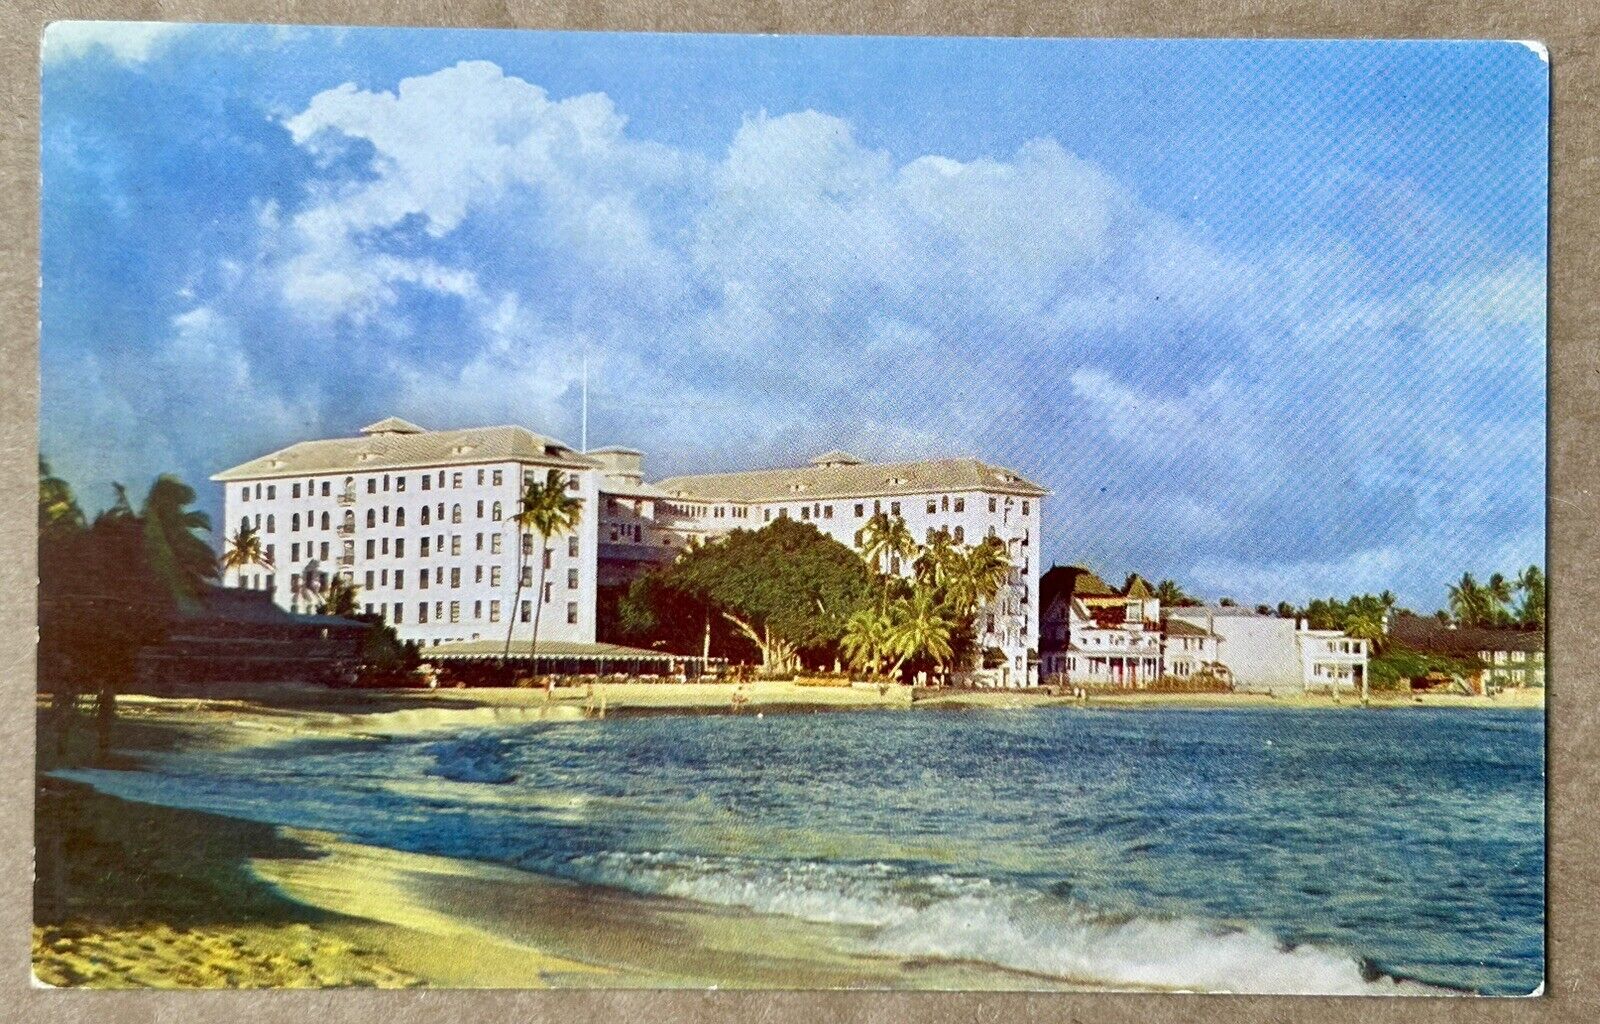 THE MOANA HOTEL. Vintage Postcard. Waikiki Beach Hawaii.